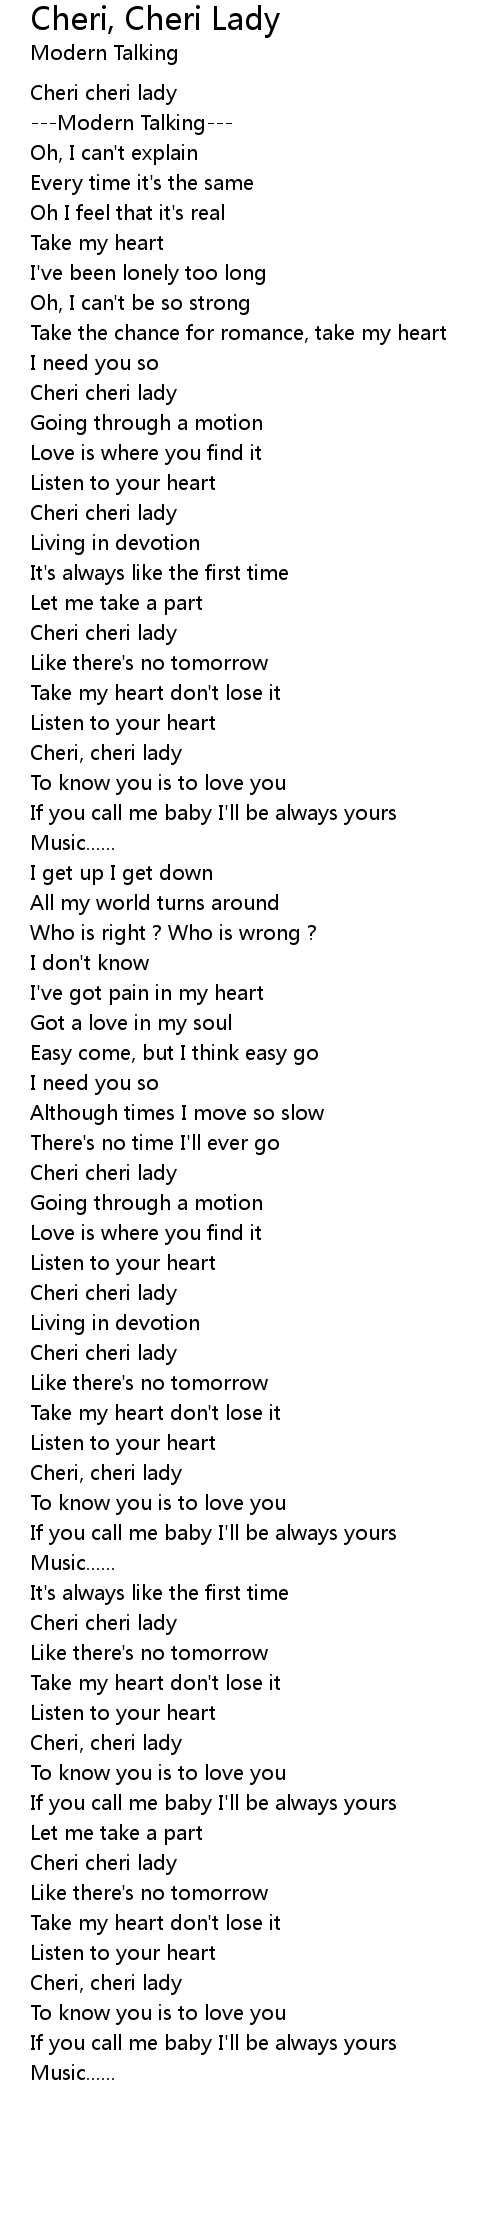 Cheri, Cheri Lady Lyrics - Follow Lyrics